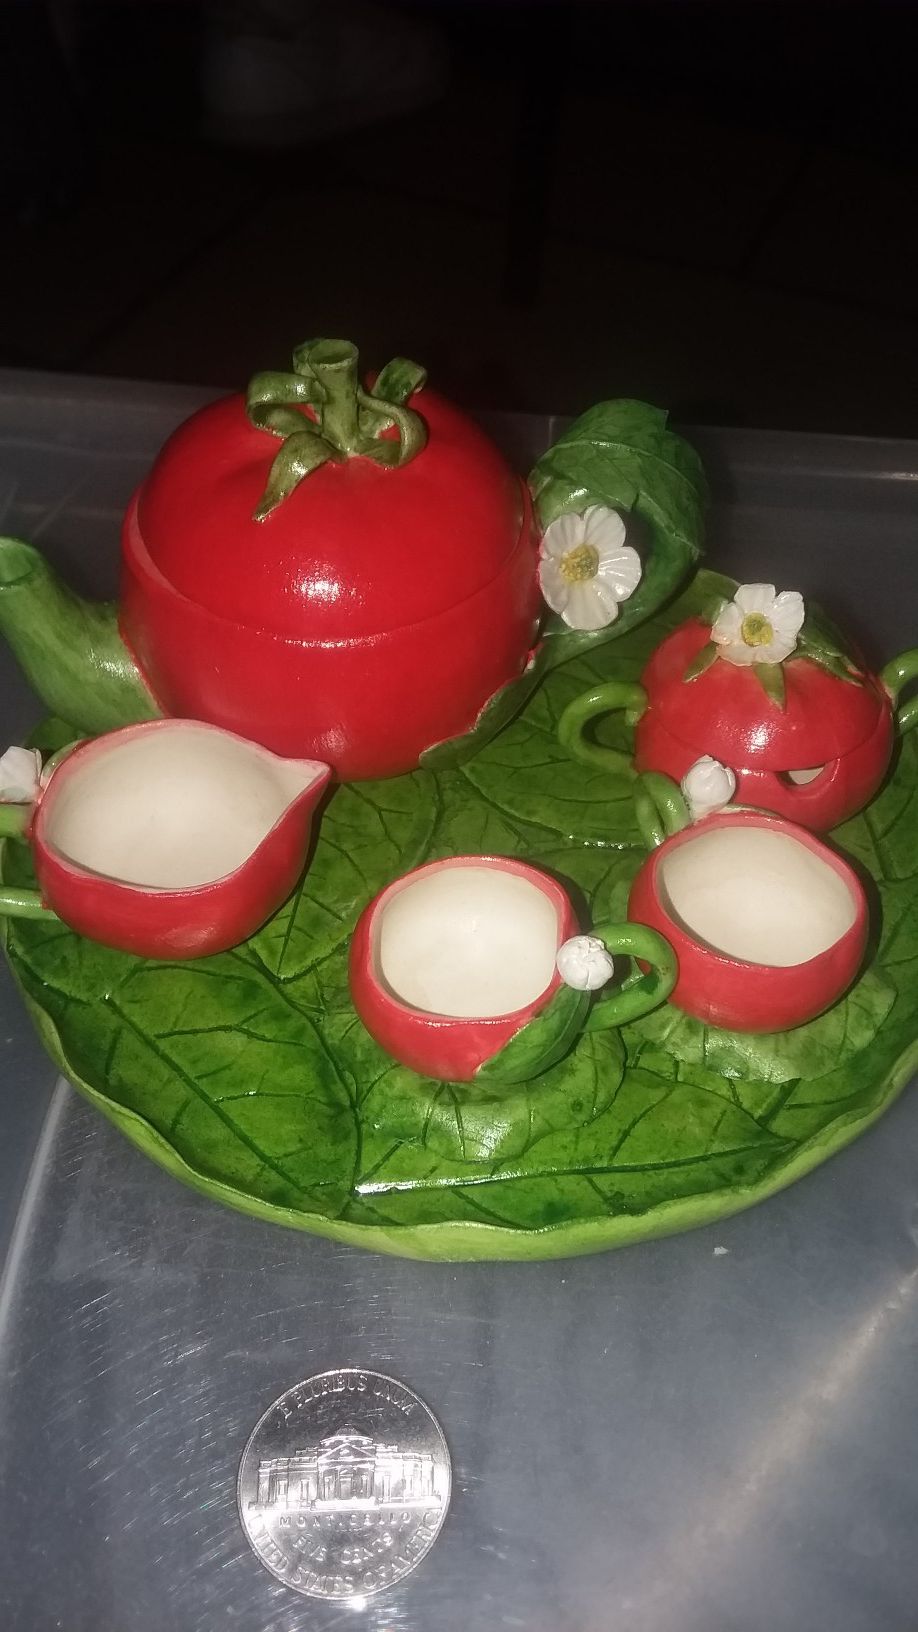 Khien Ceramics miniture tomato tea set